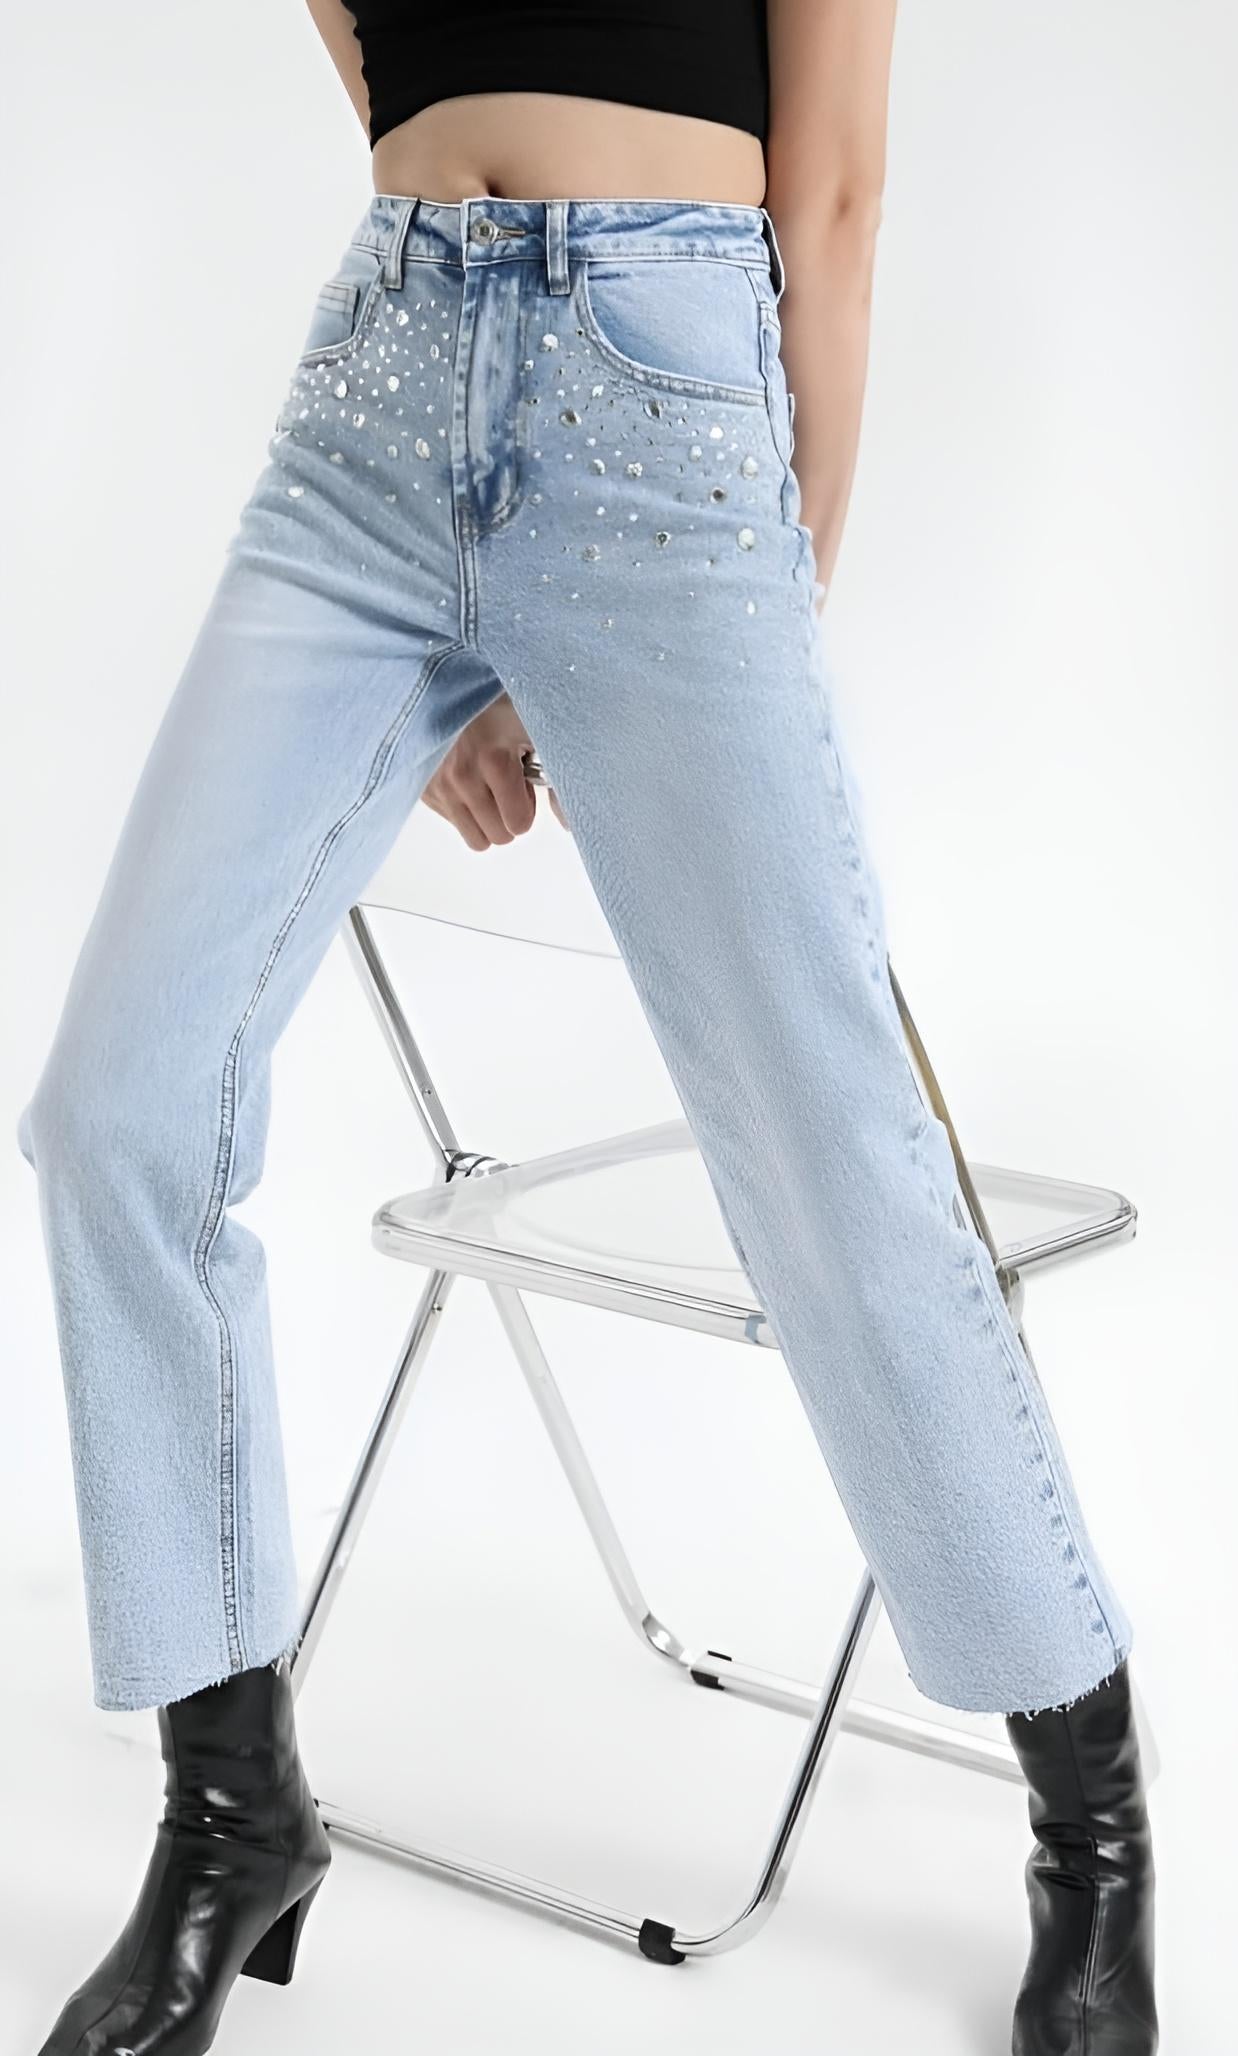 Pantalone Donna Jeans Strass Vita Alta Casual Comodo - LE STYLE DE PARIS